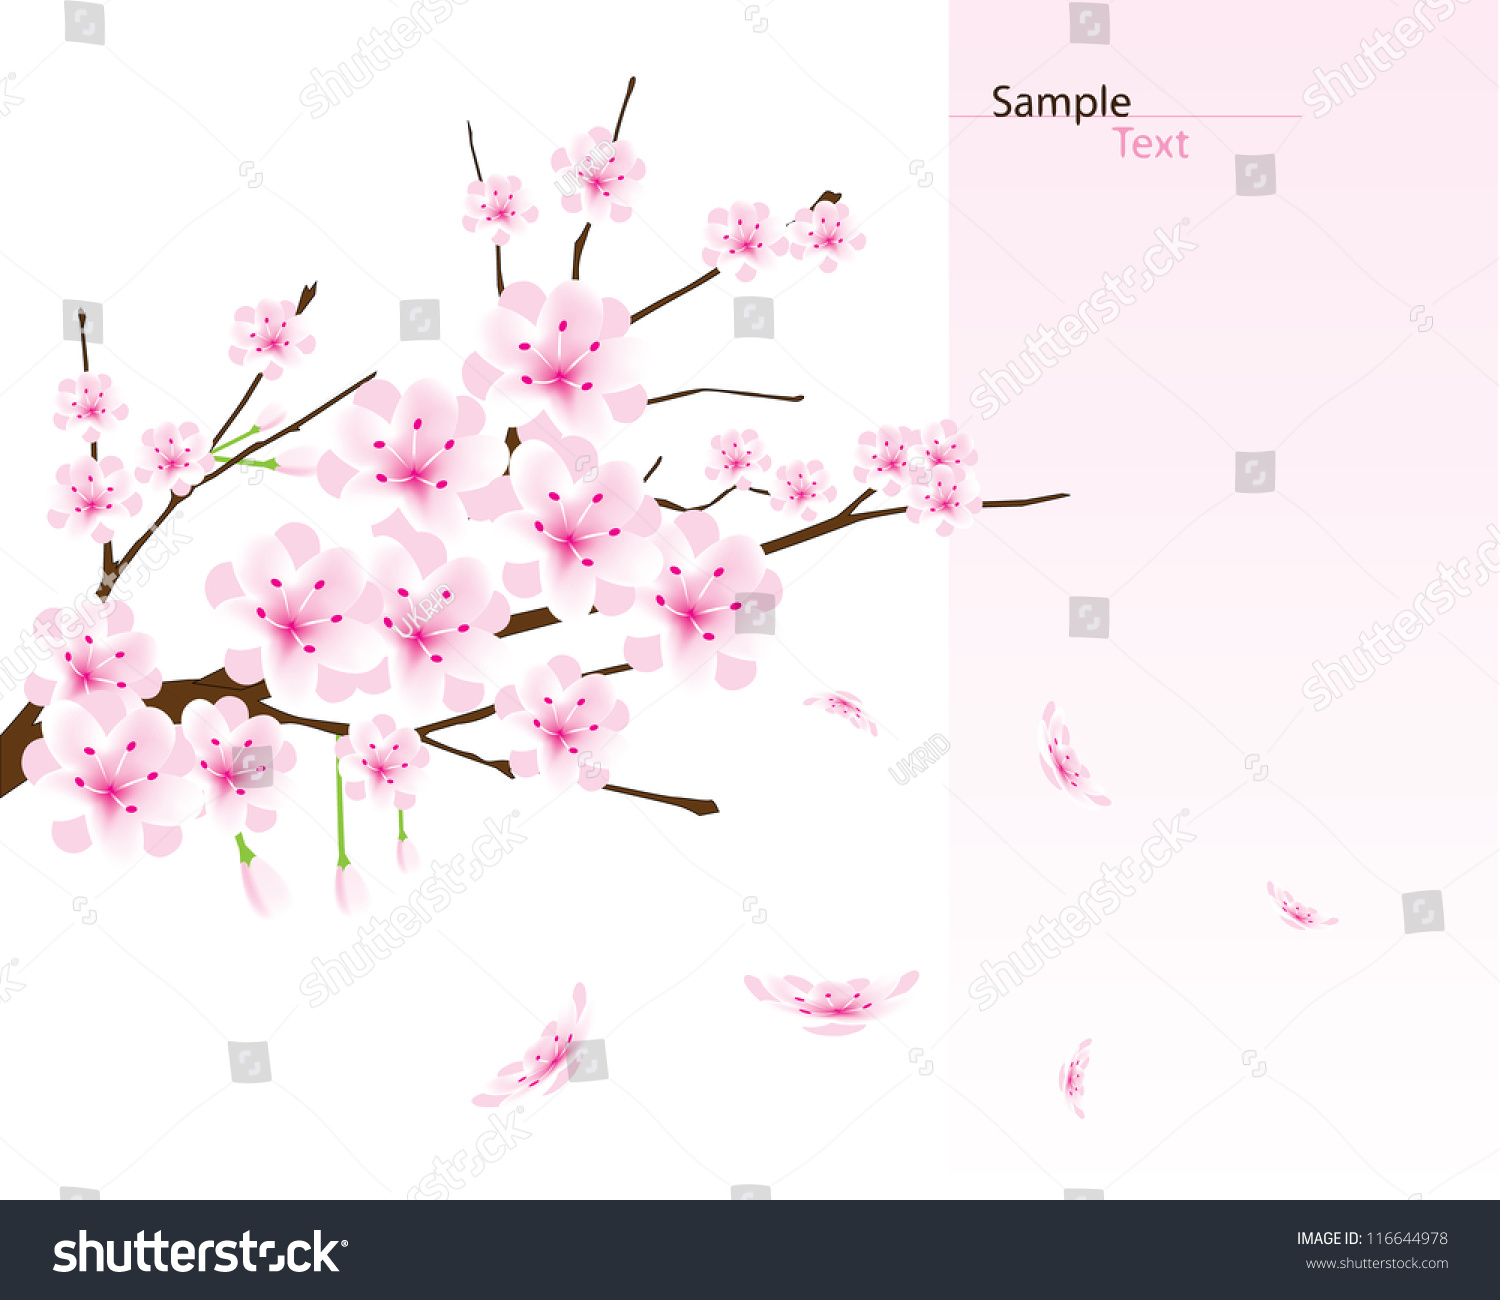 Vector Cherry Blossom Branch - 116644978 : Shutterstock